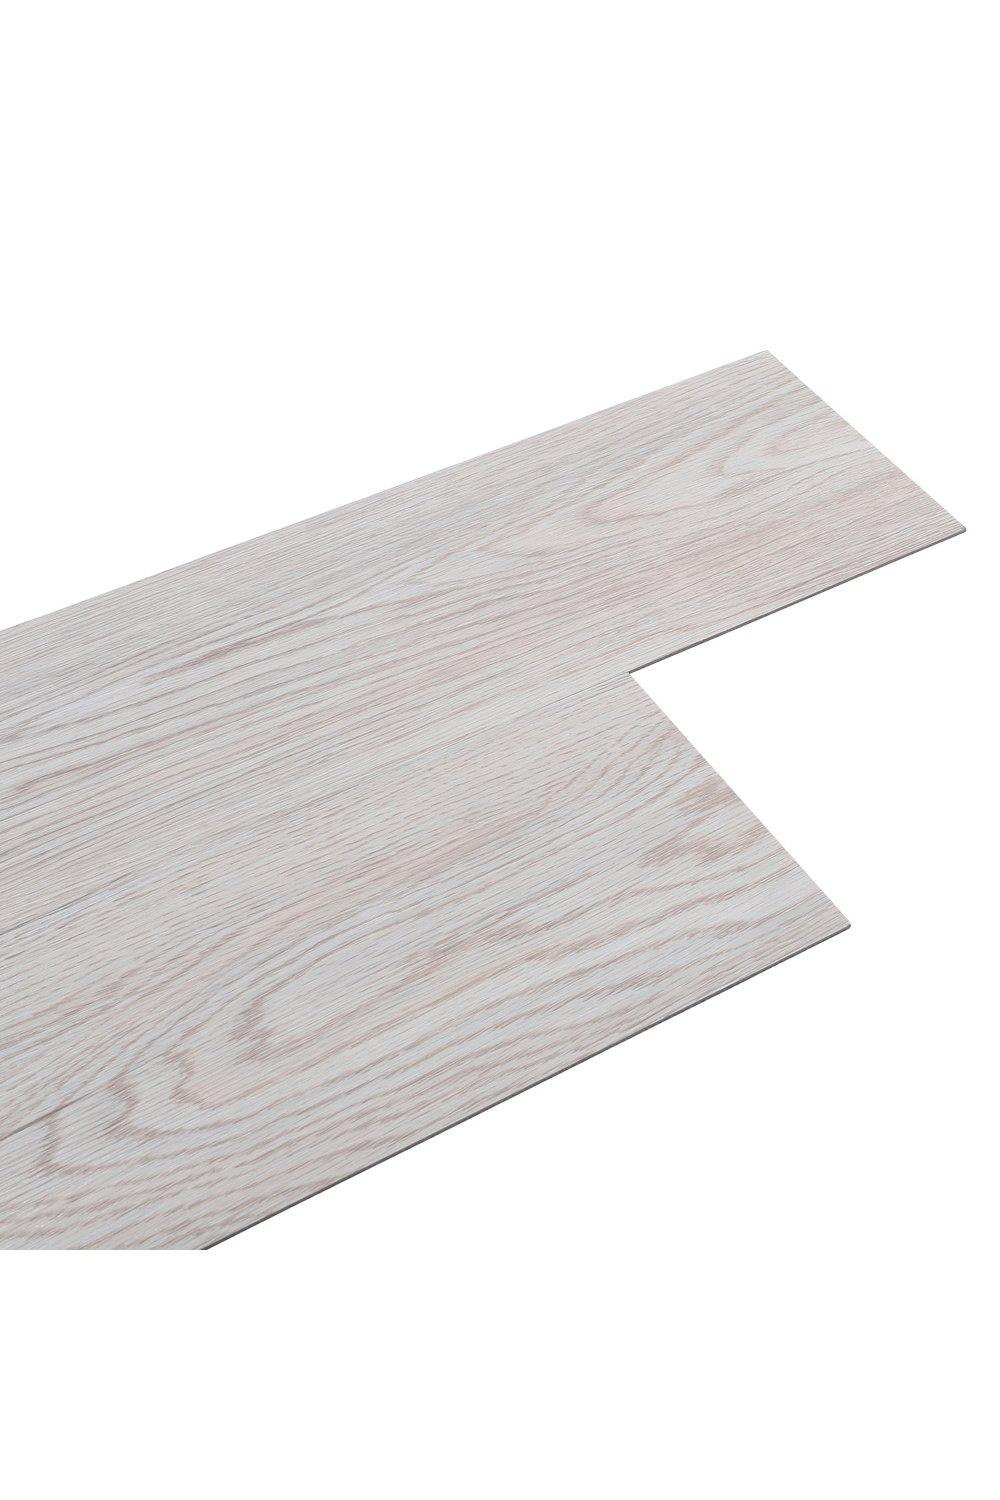 36Pcs Rustic Style PVC Self-adhesive Plank Flooring